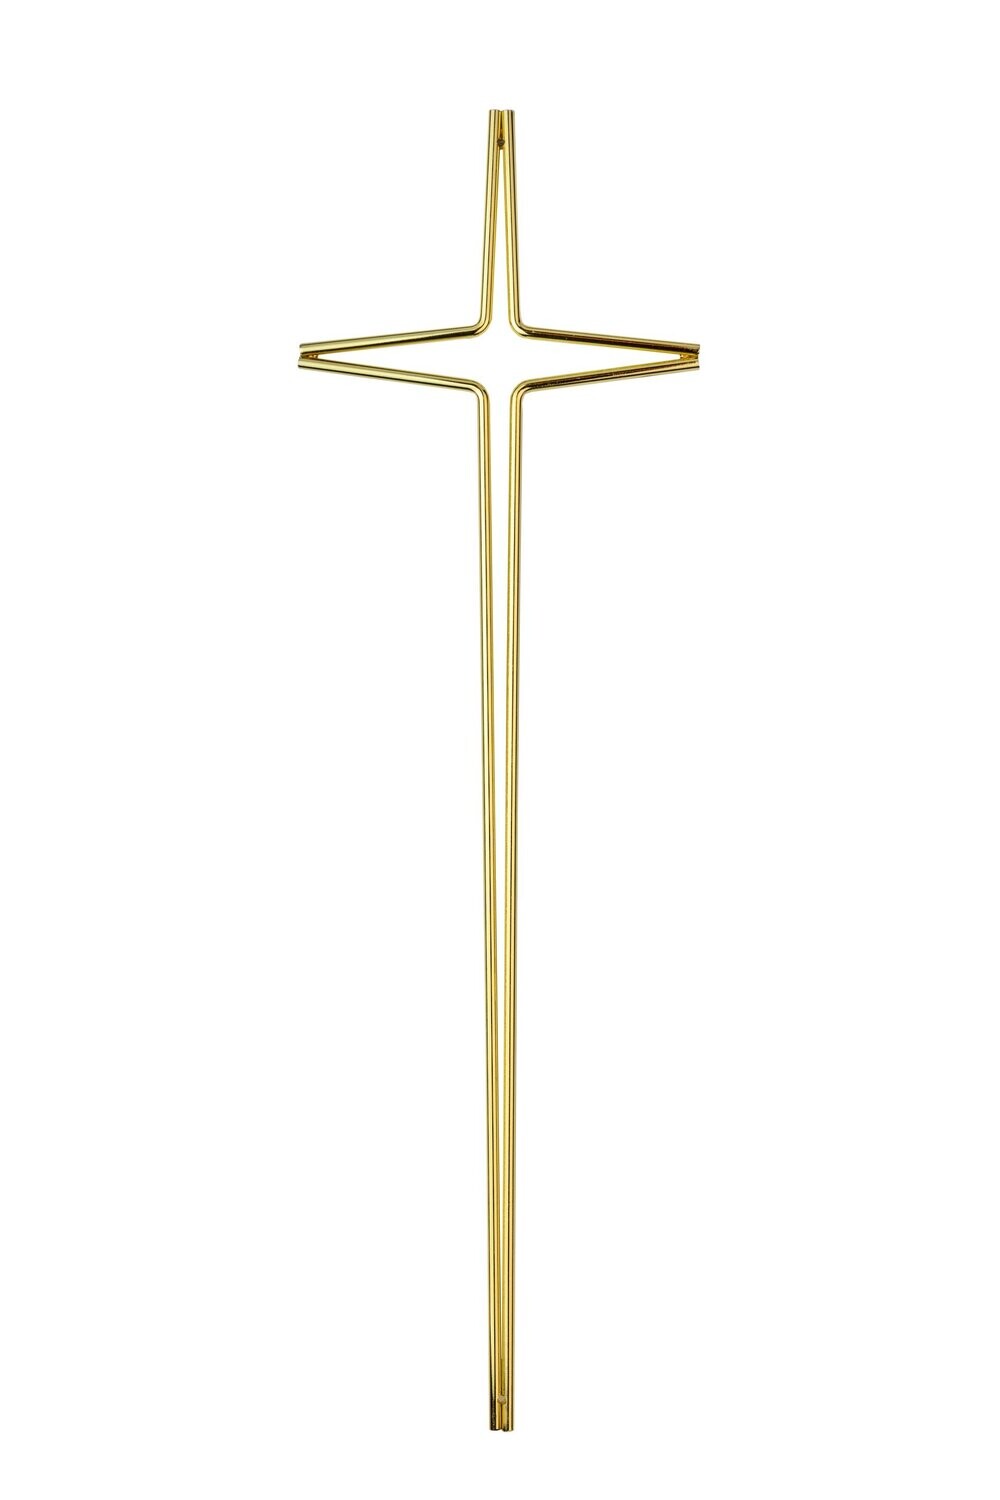 Cross for coffin in steel series 555 polish brass finishing